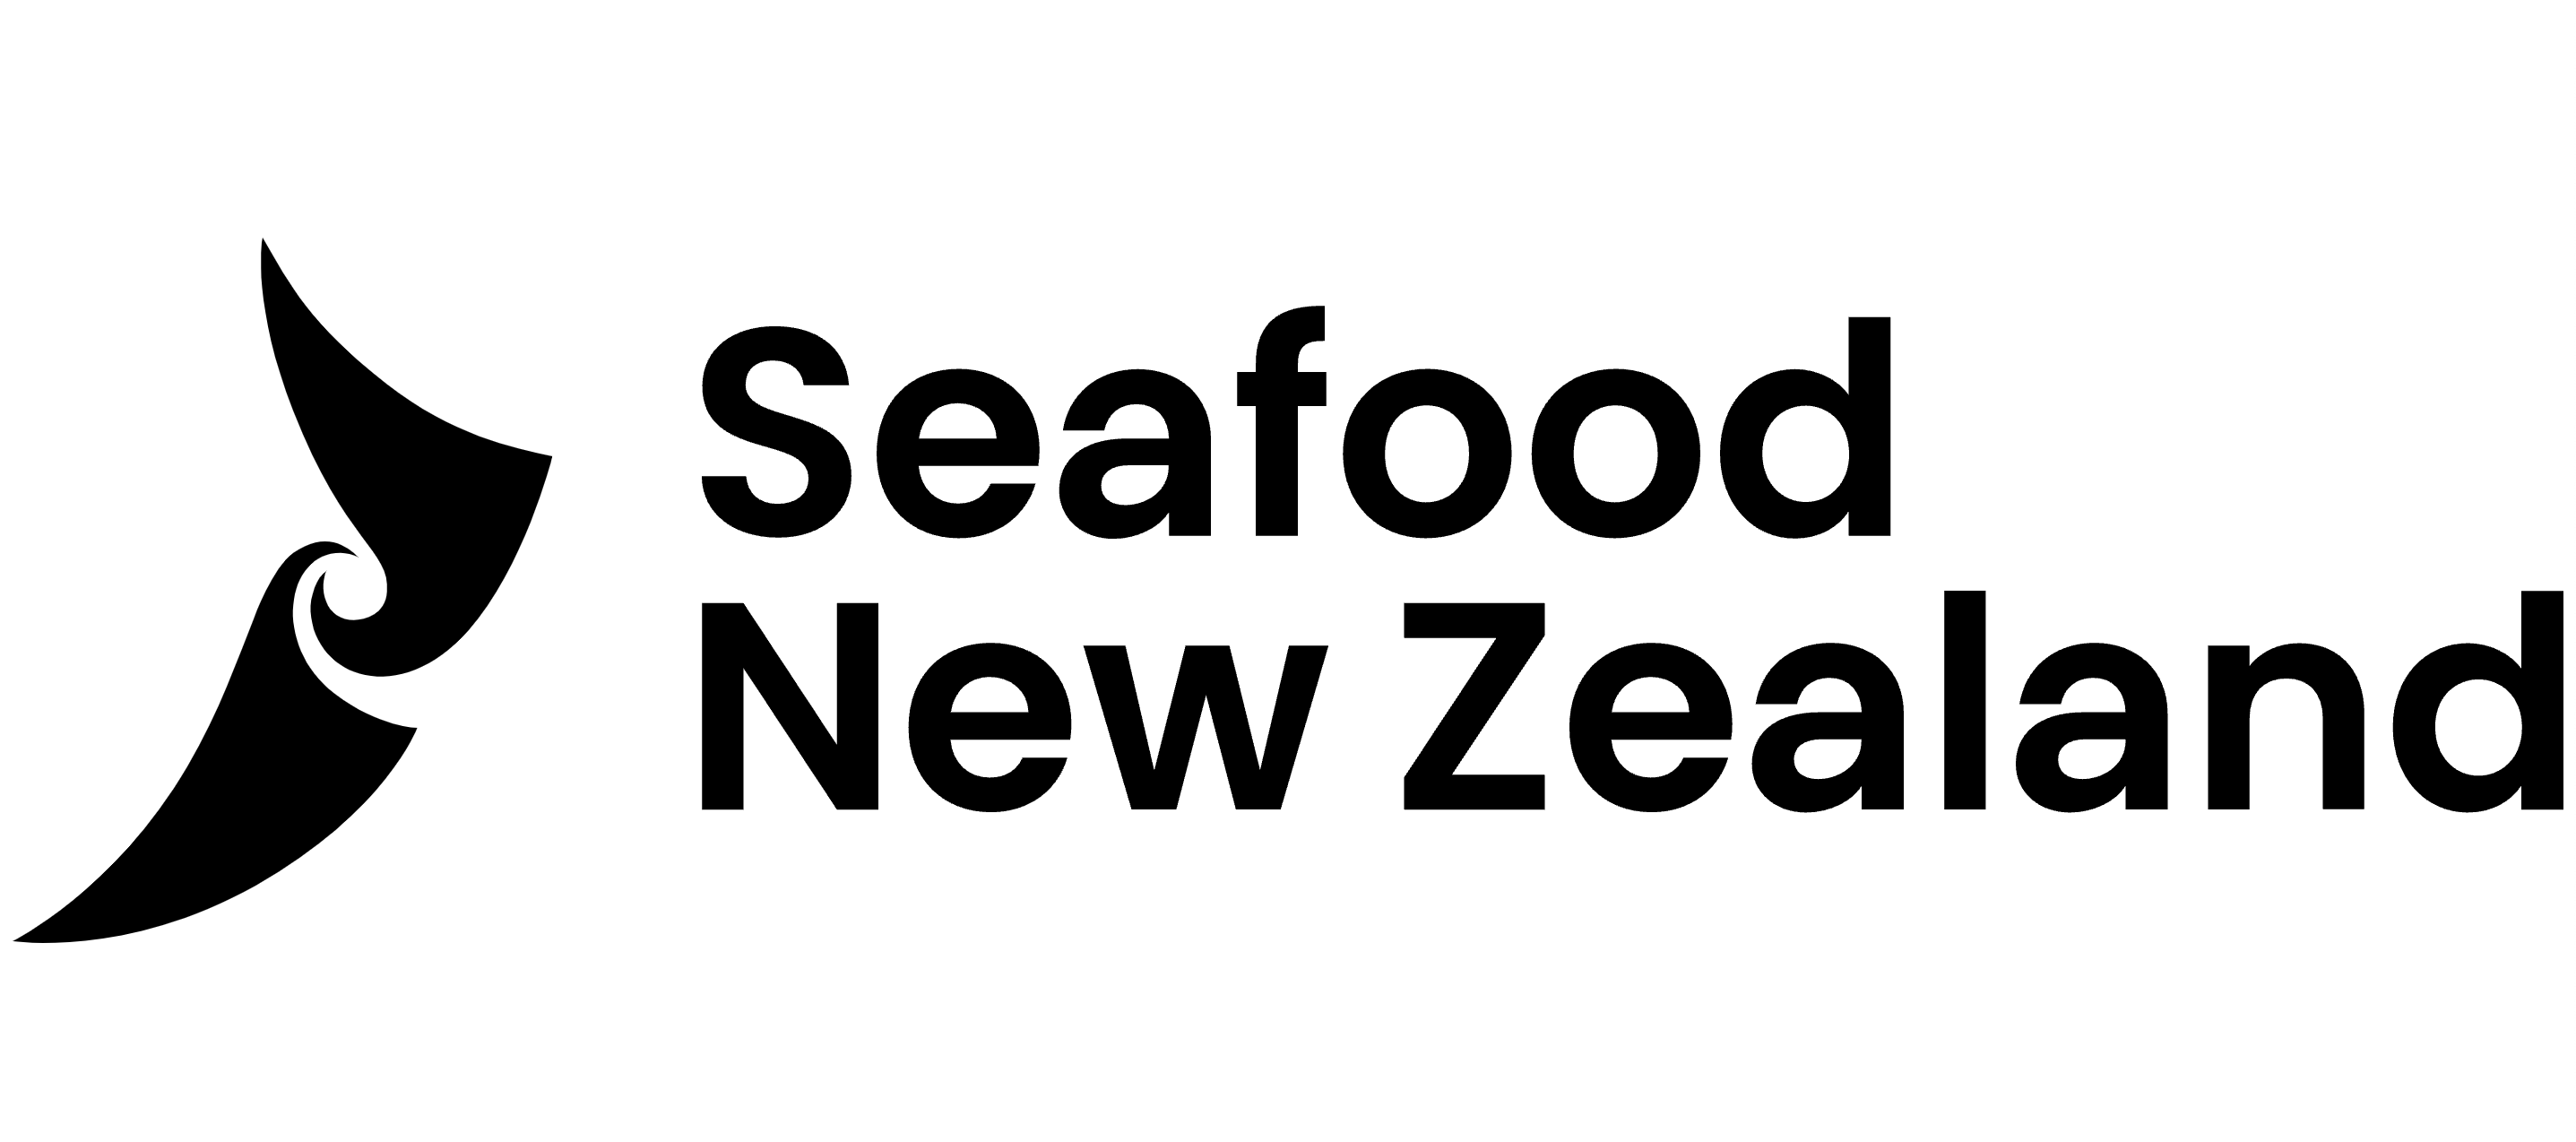 Seafood New Zealand